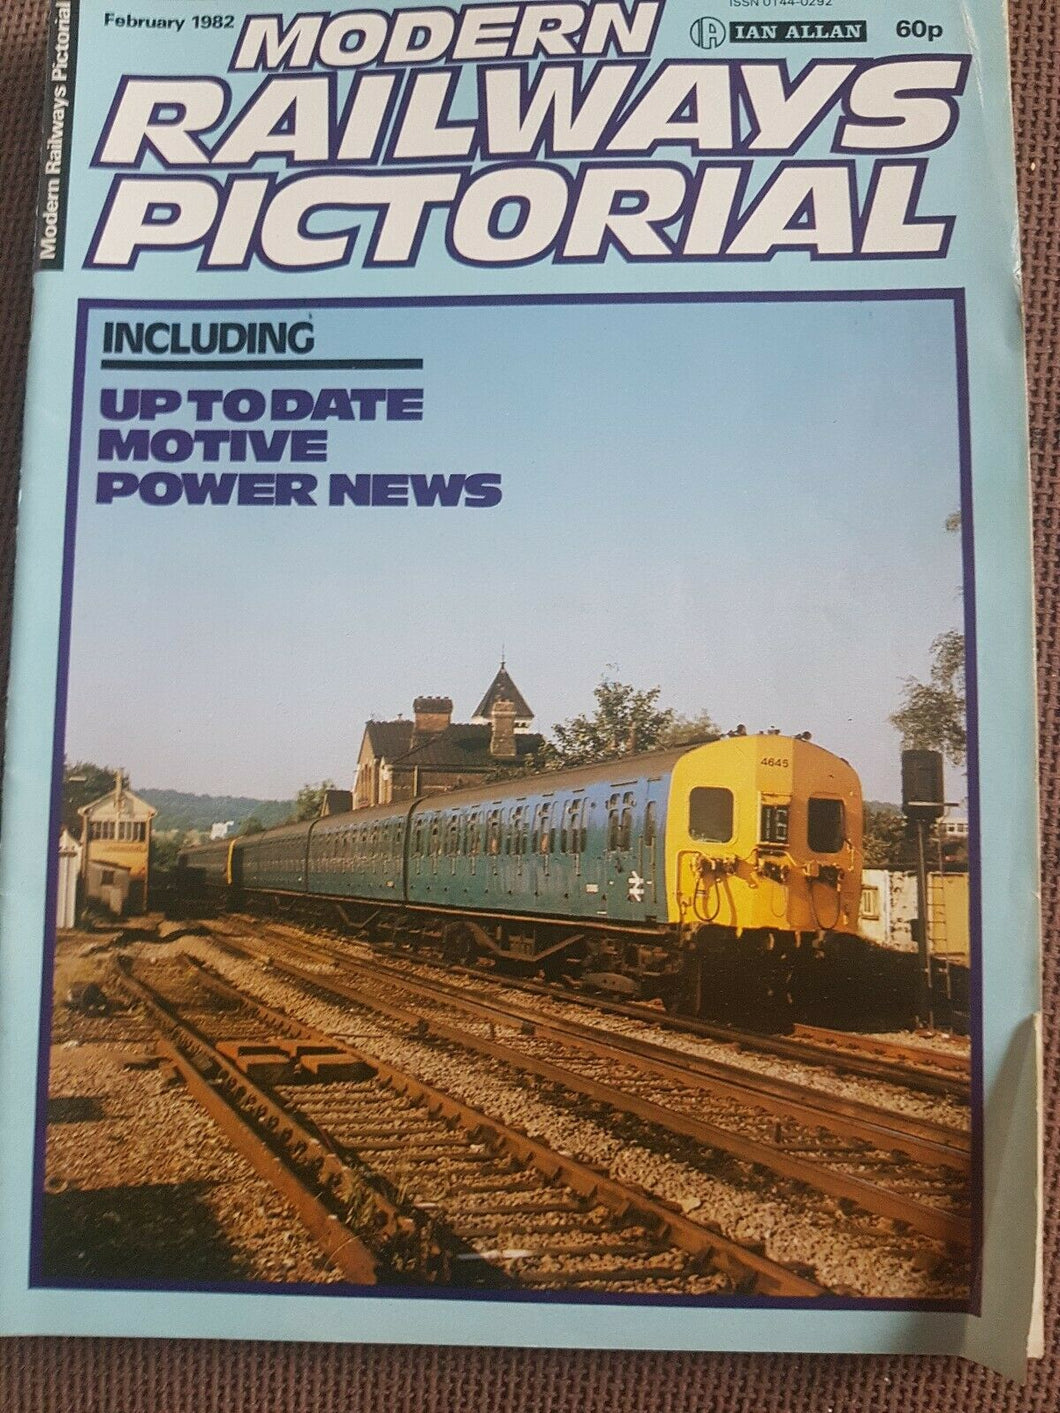 MODERN RAILWAYS PICTORIAL Magazine. IAN ALLAN. FEBRUARY 1982